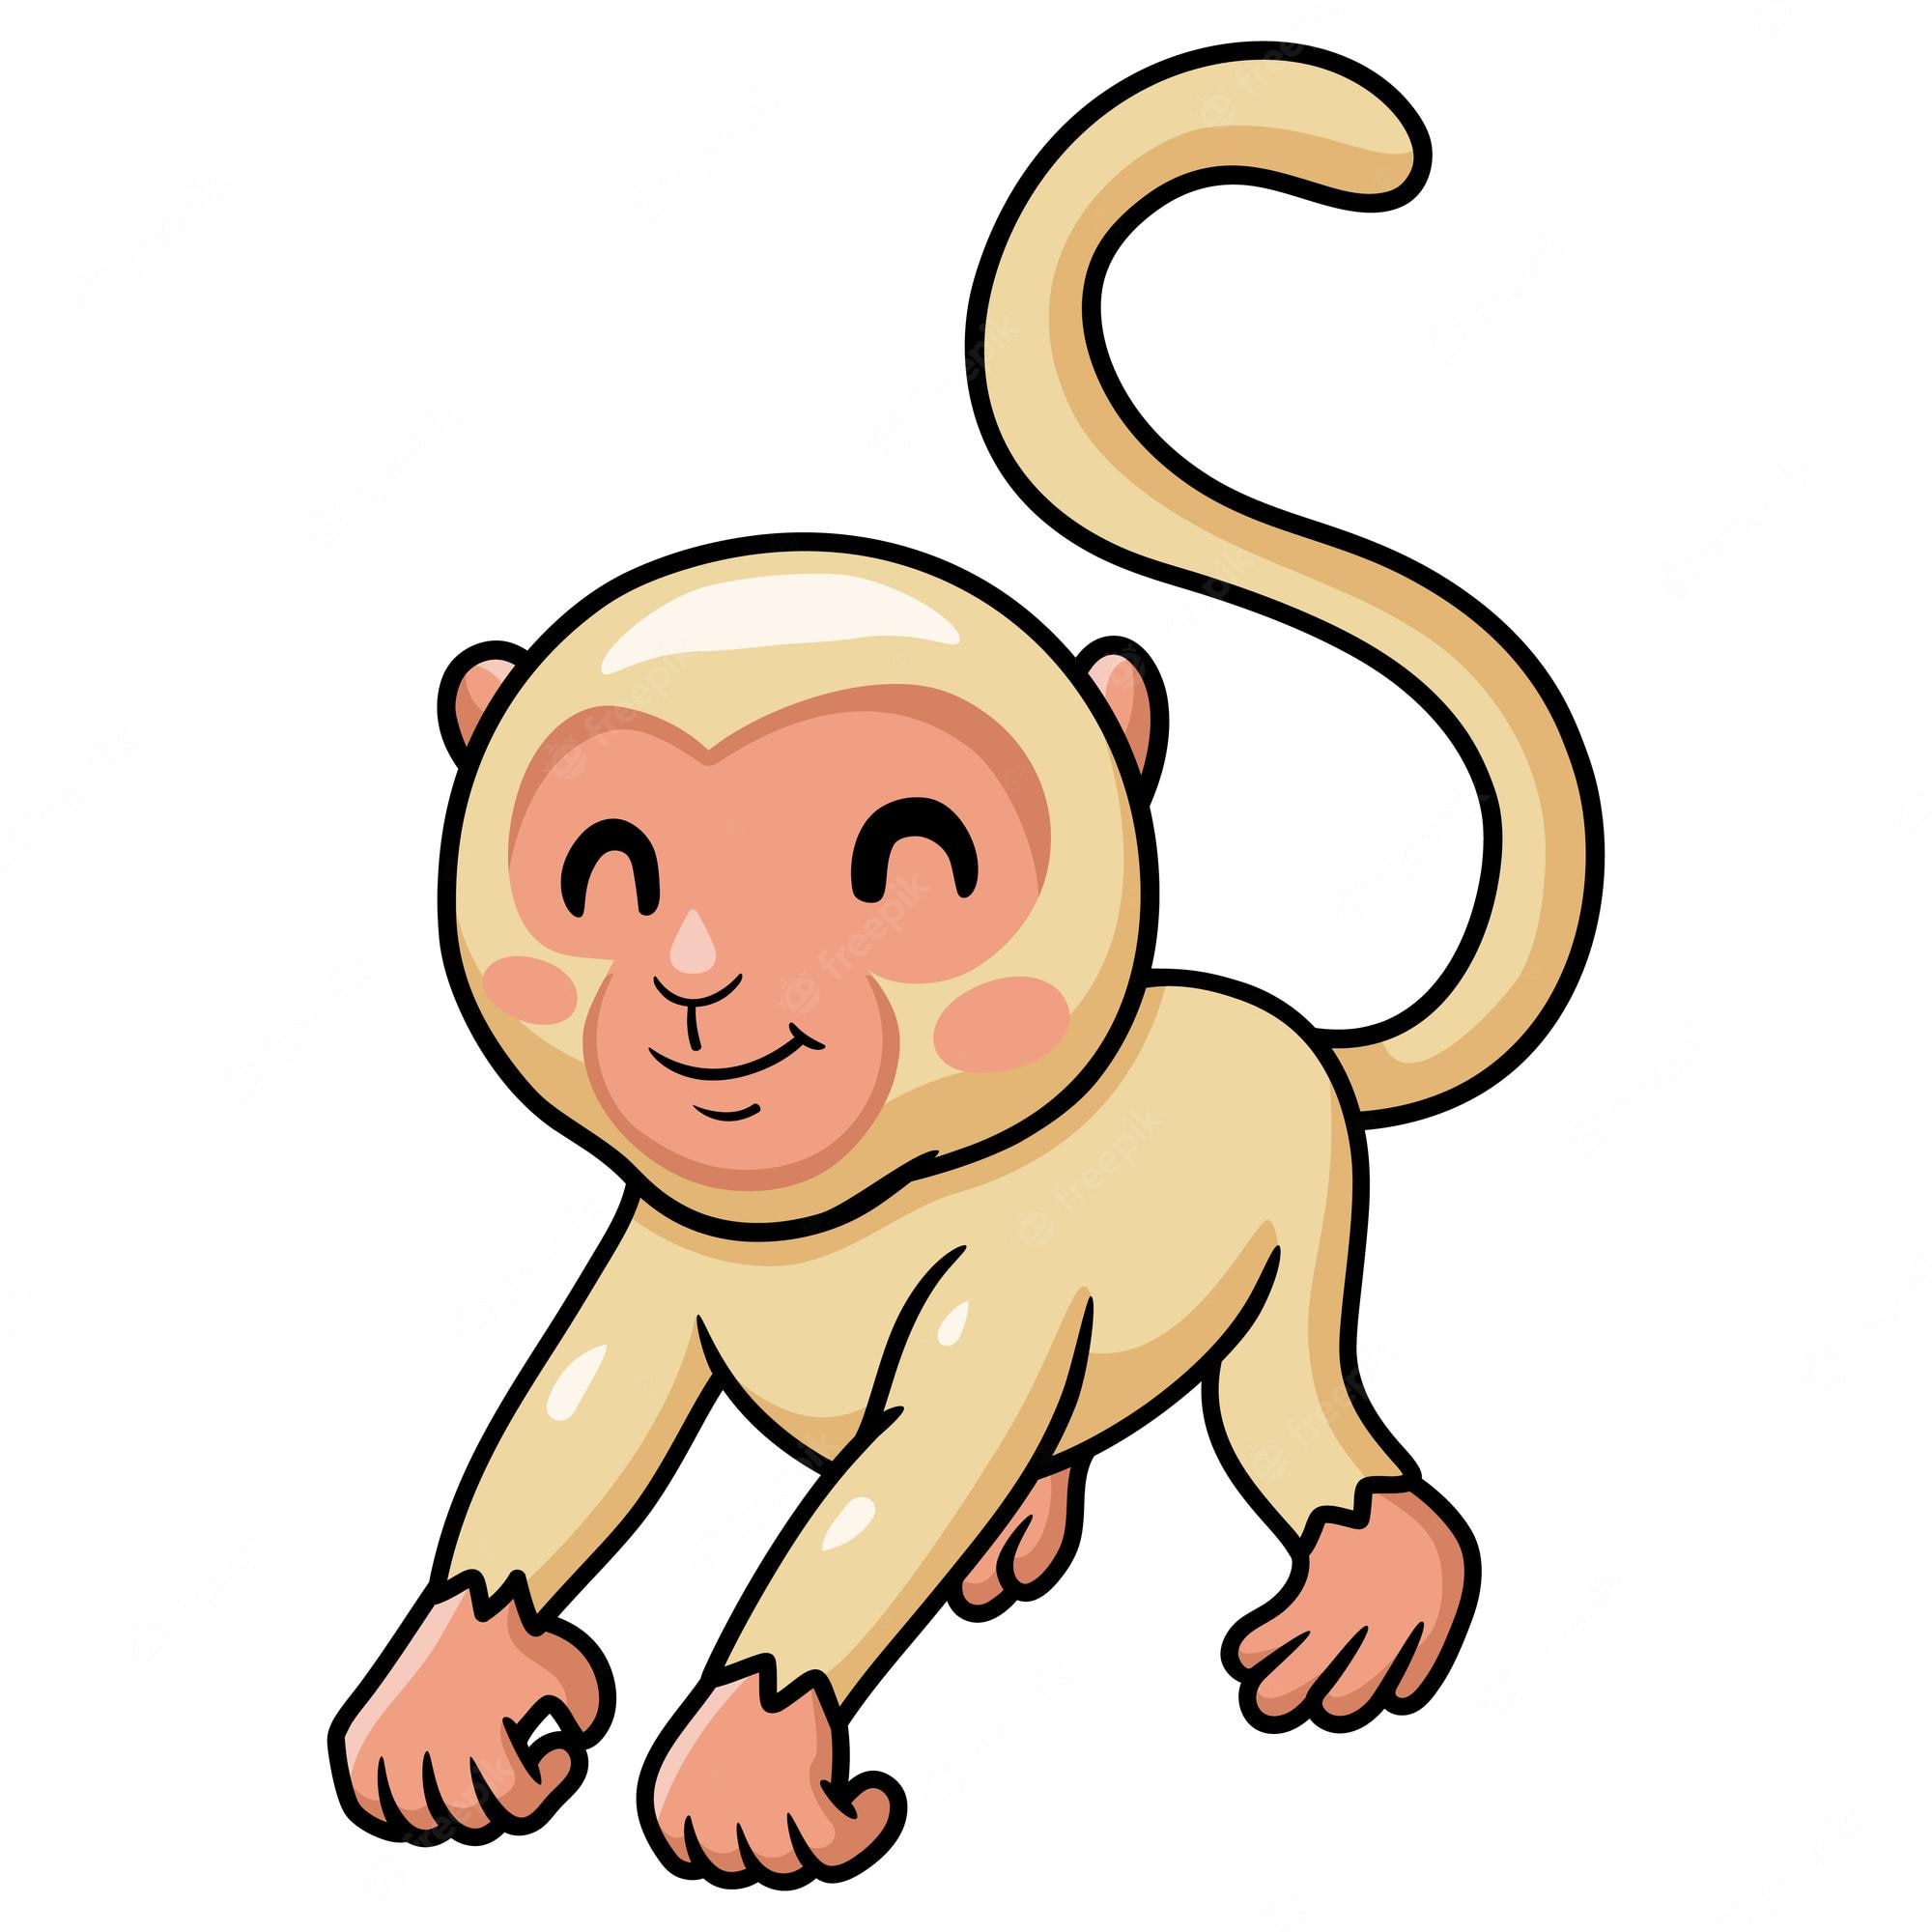 Kawaii monkey Image. Free Vectors, & PSD